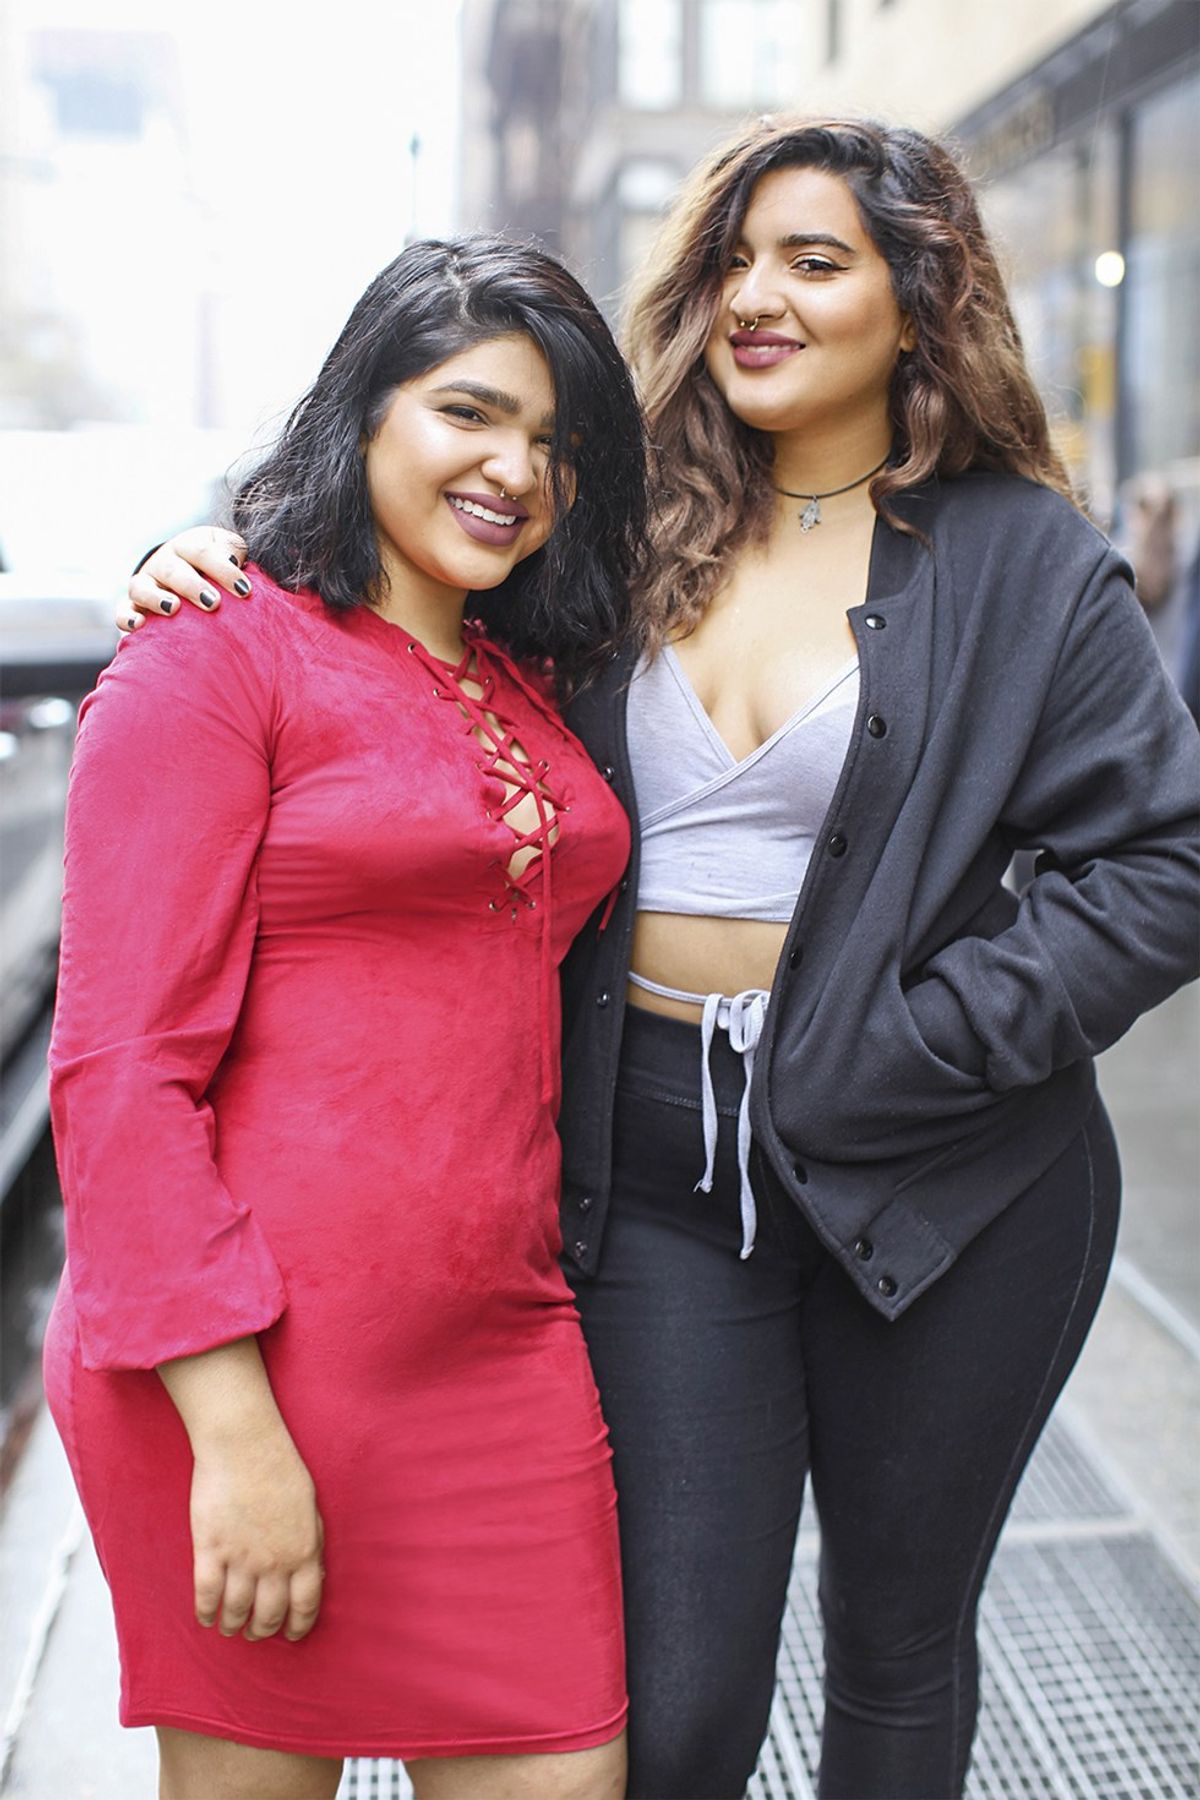 Rising Models: Mina Mahmood And Dounia Tazi